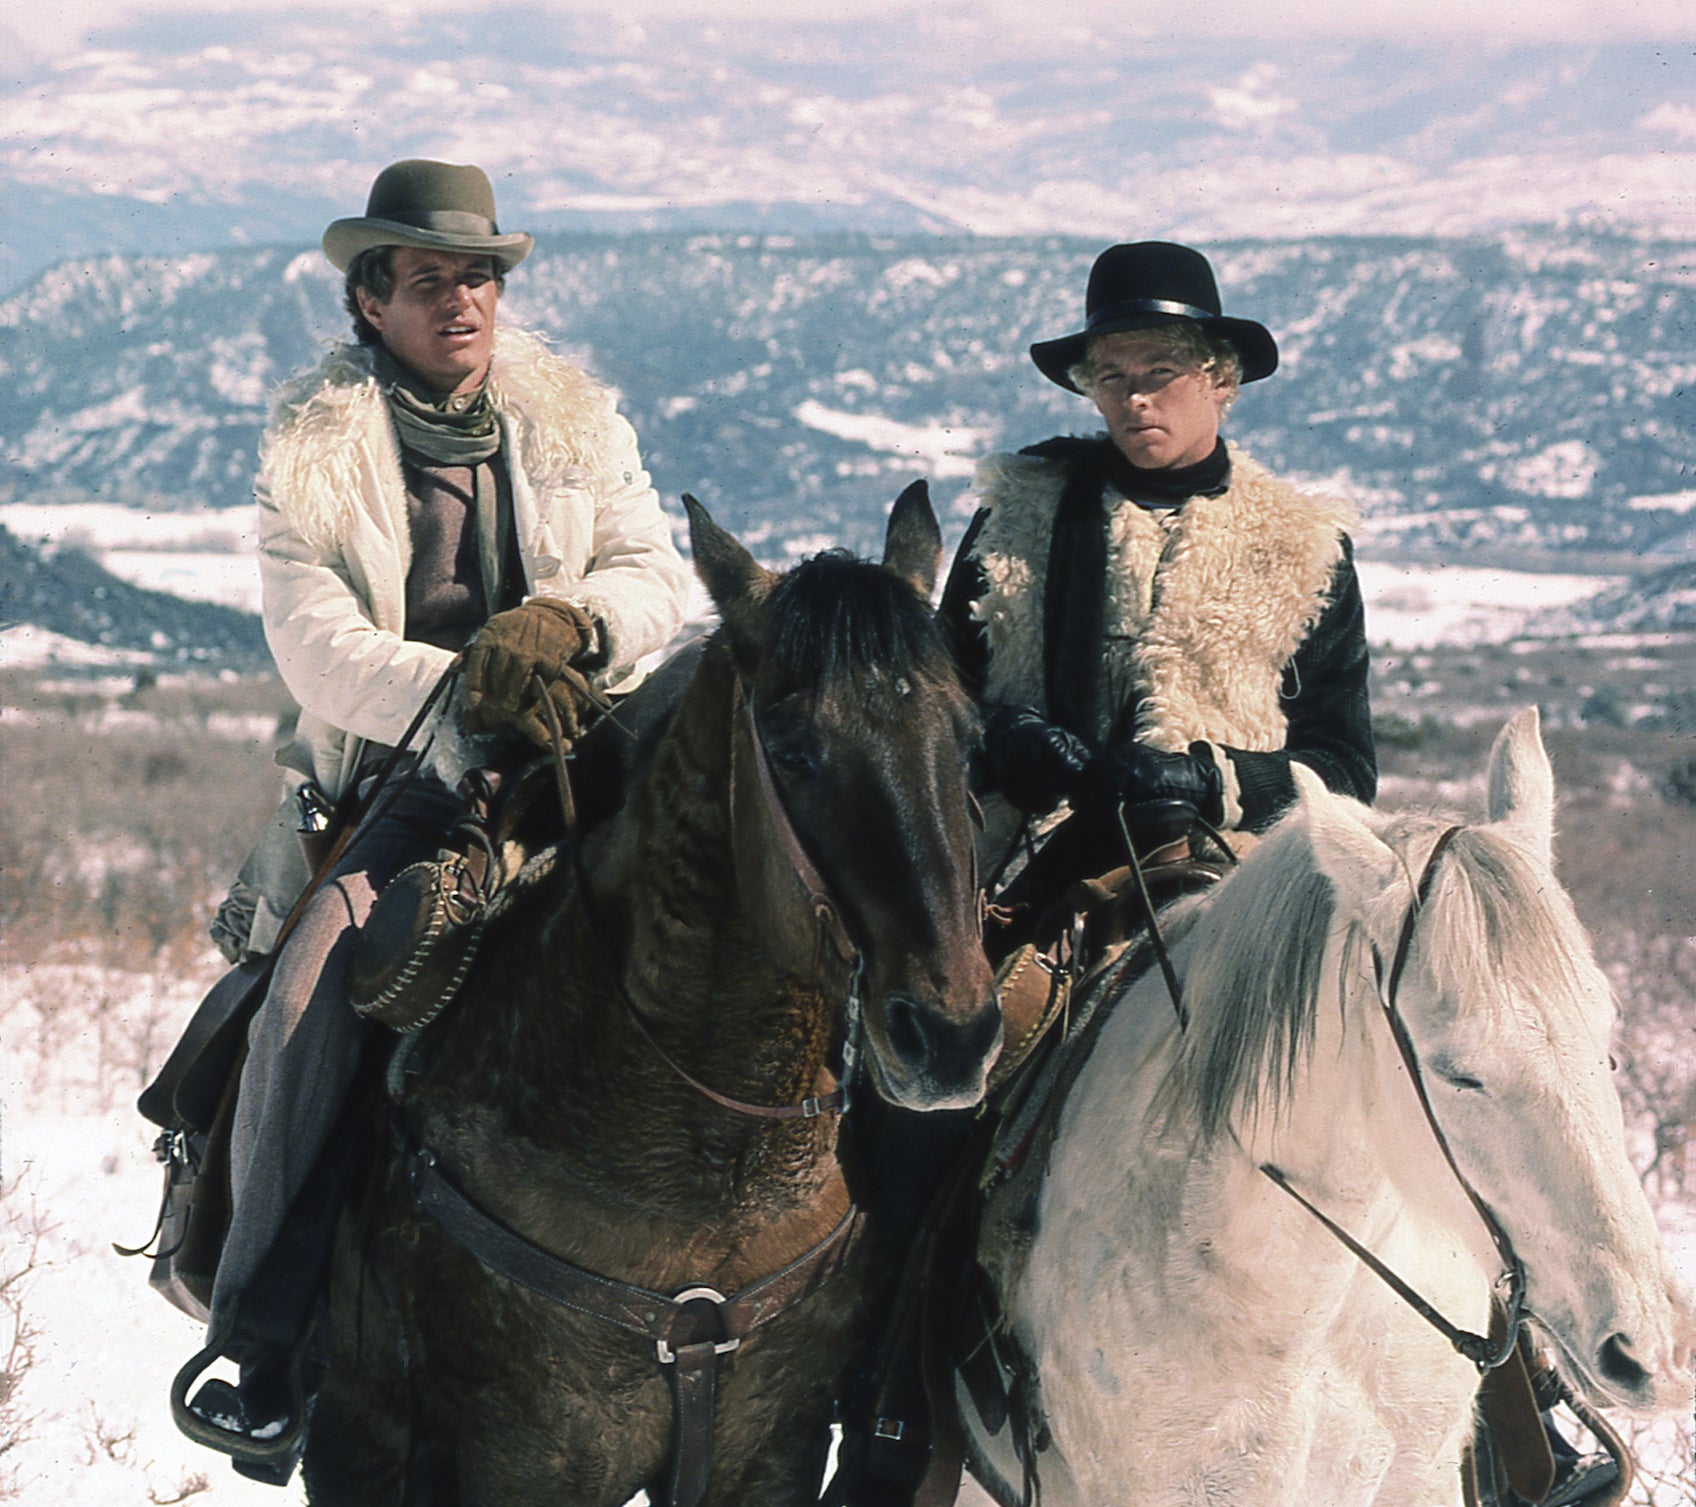 Publicity image of Tom Berenger and William Katt on horses